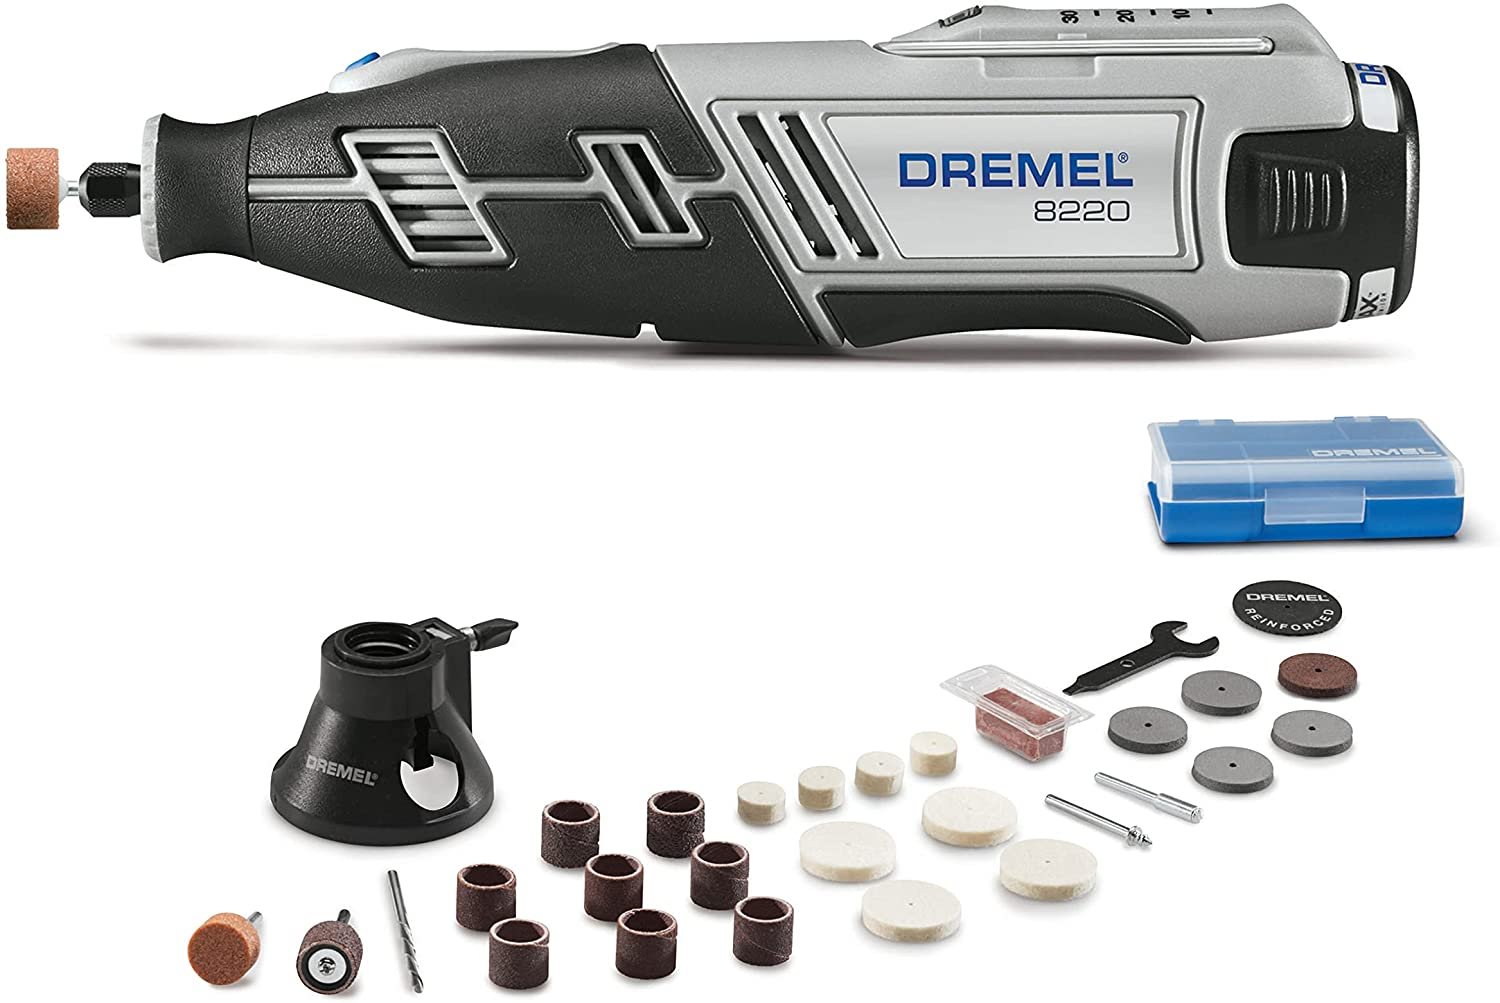 Dremel 8220-1/28 12-Volt Max Cordless Rotary Tool Kit